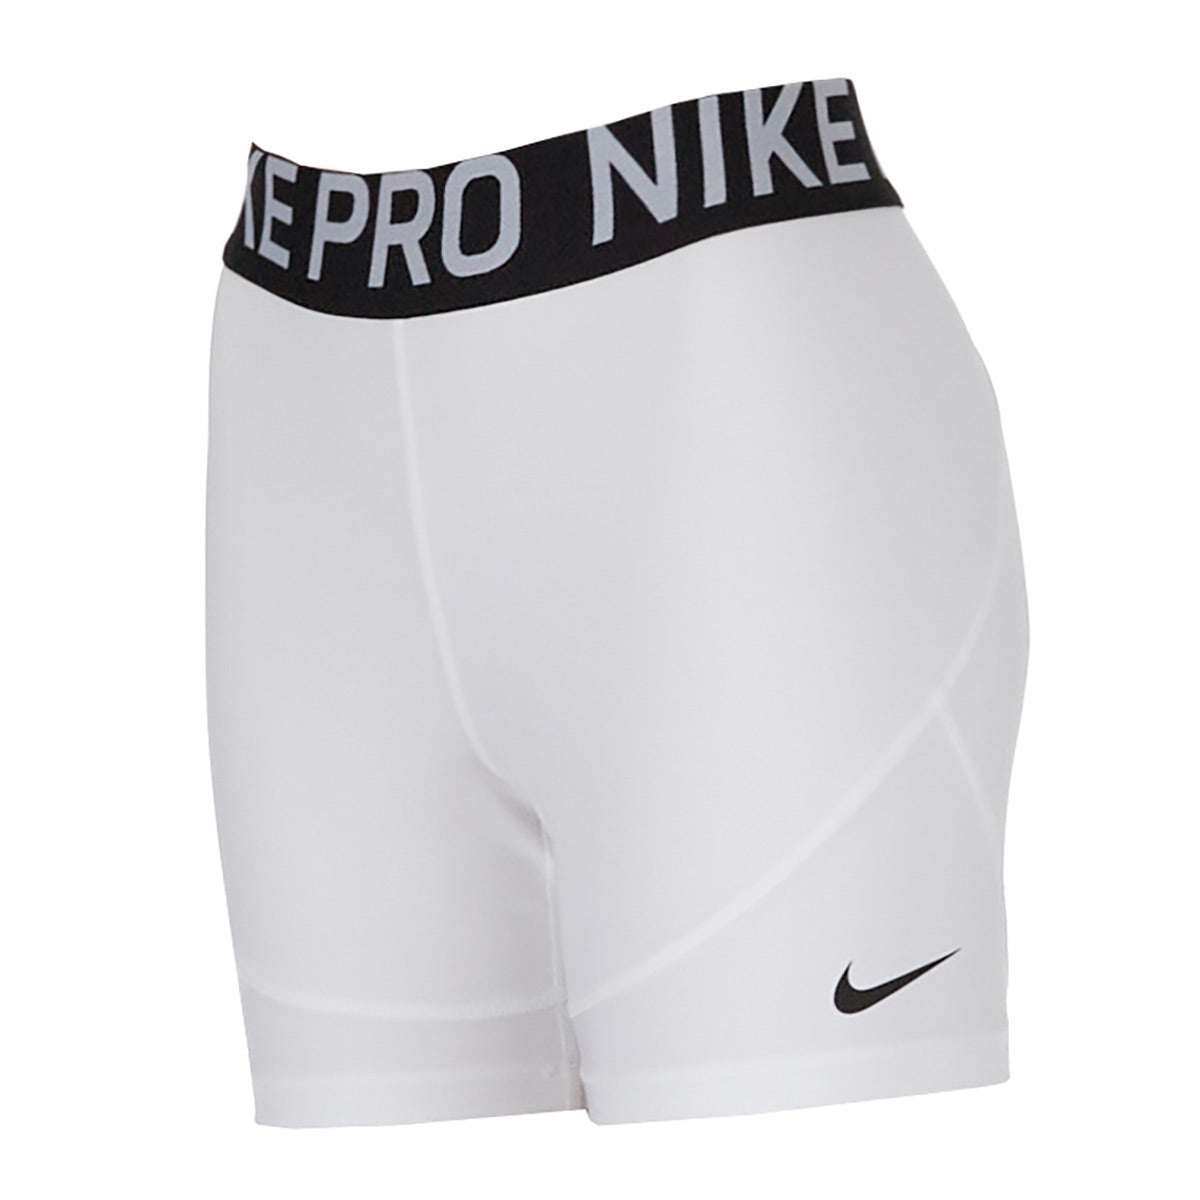 Womens Nike Pro Shorts.